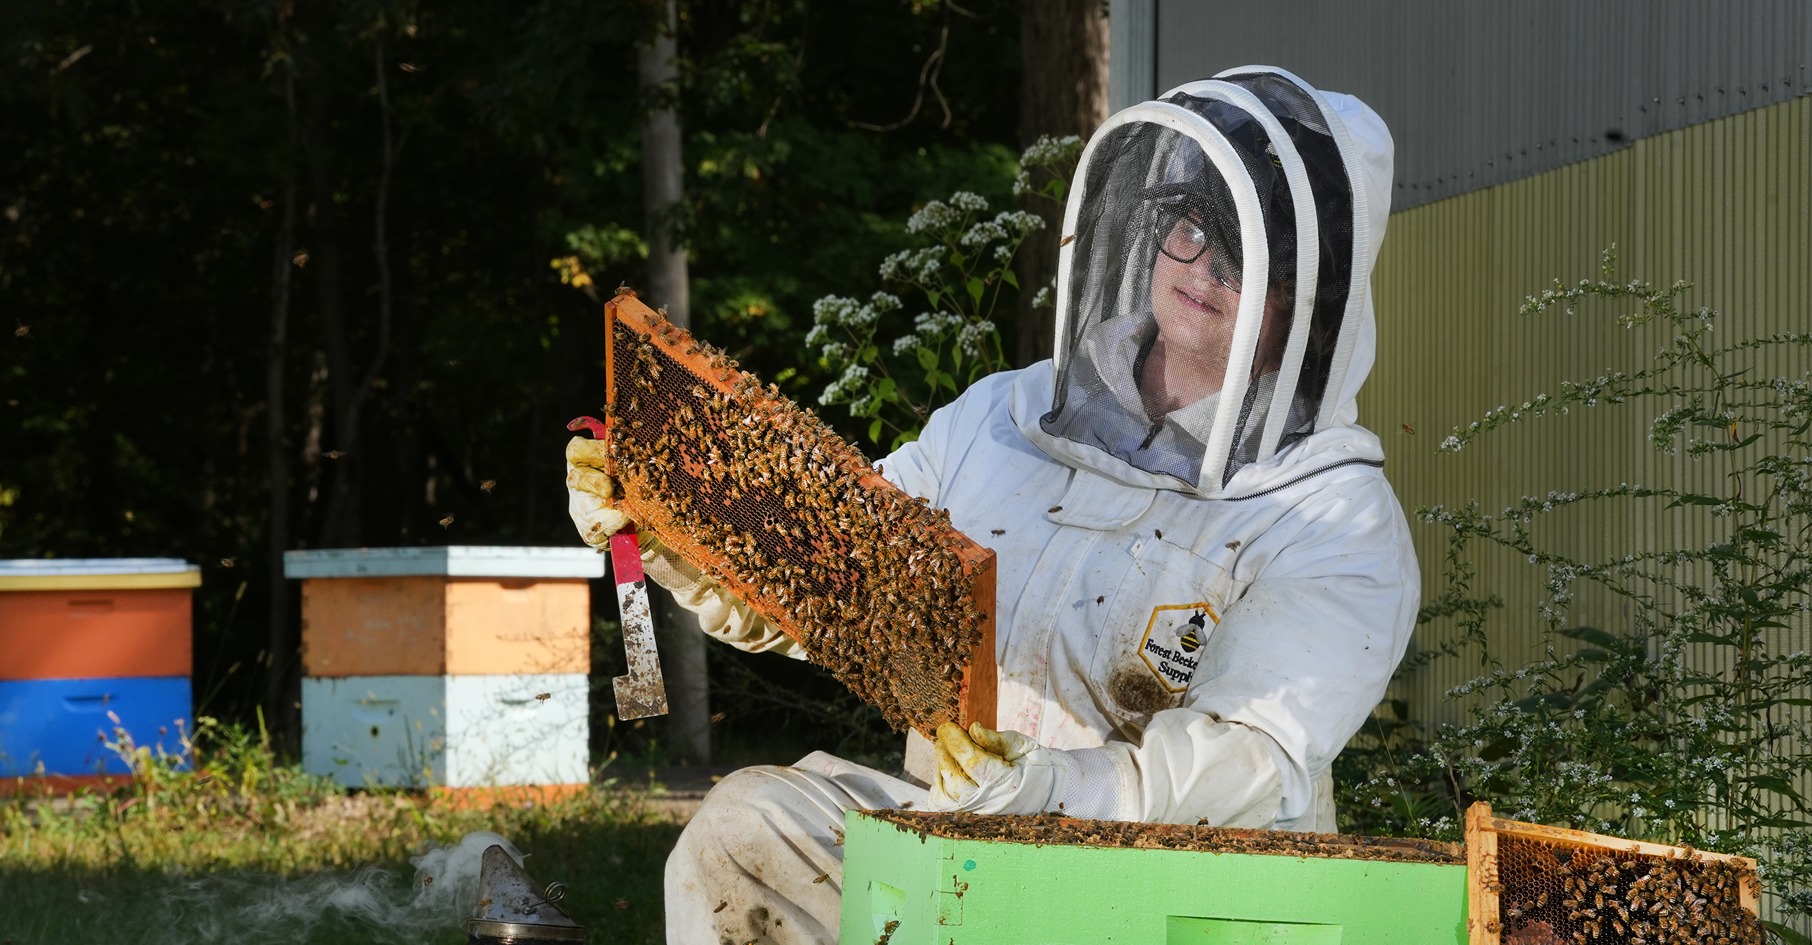 Izaak working with bee hives